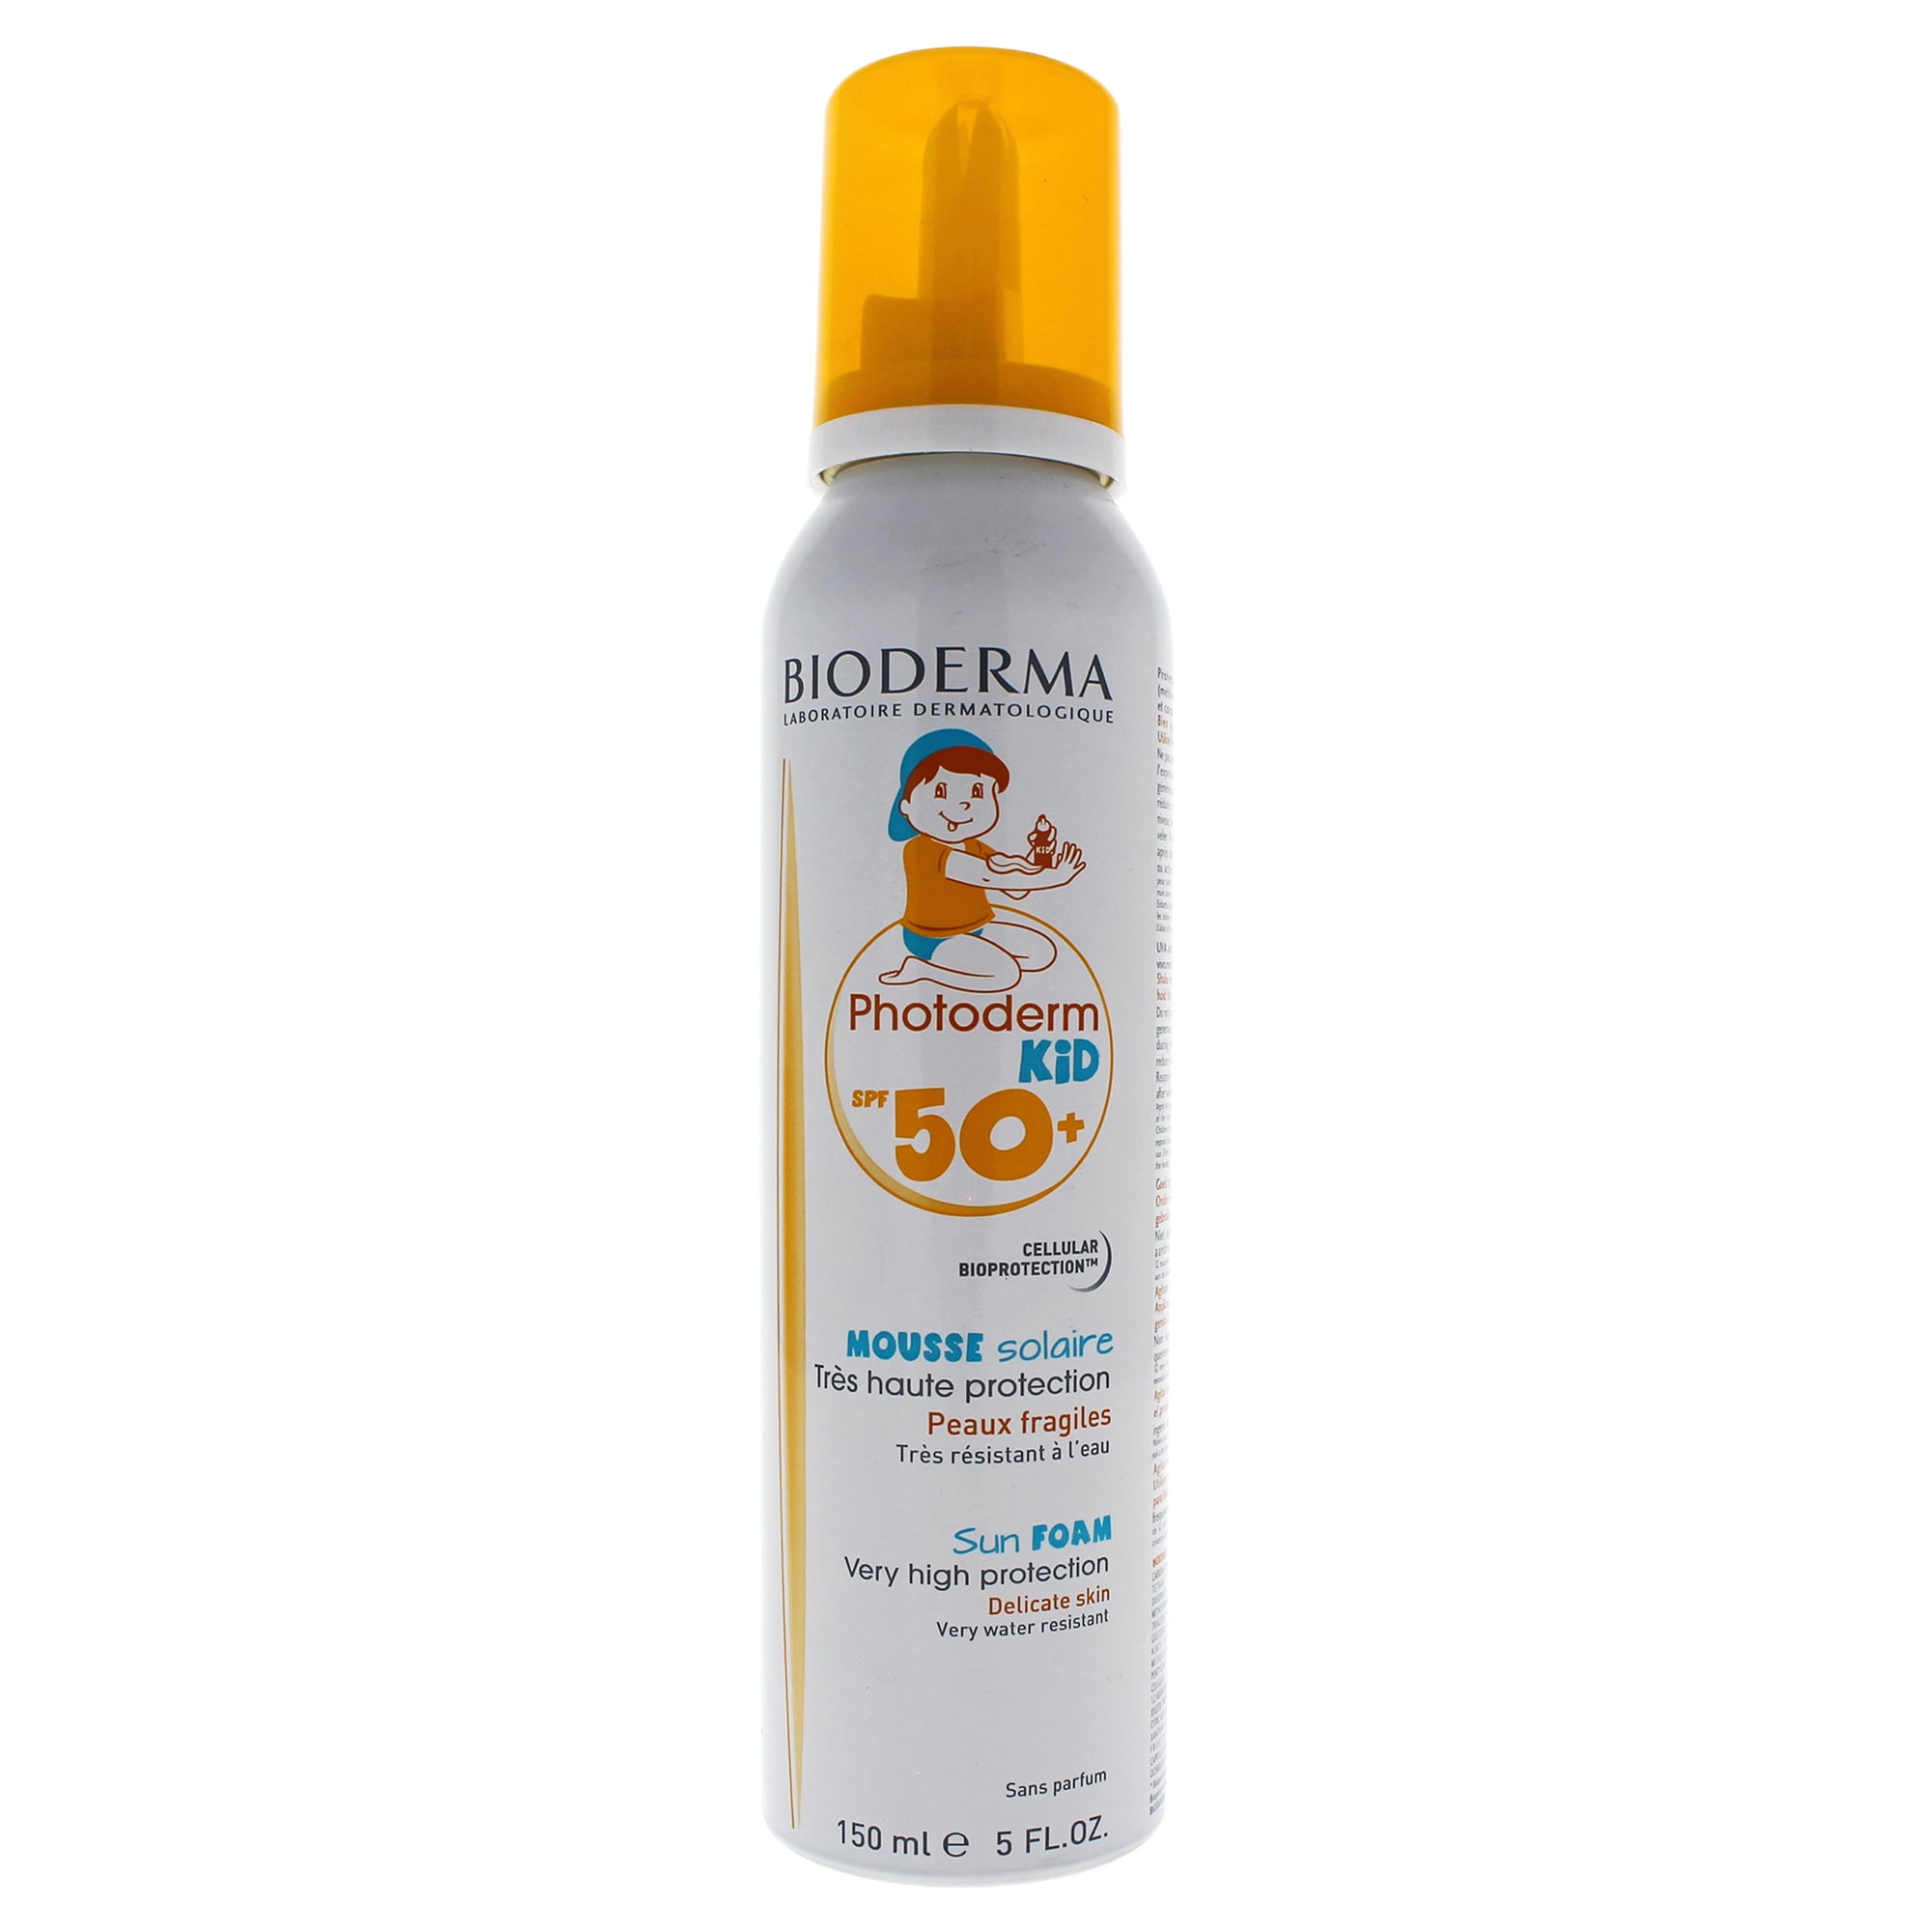 bioderma baby sunscreen